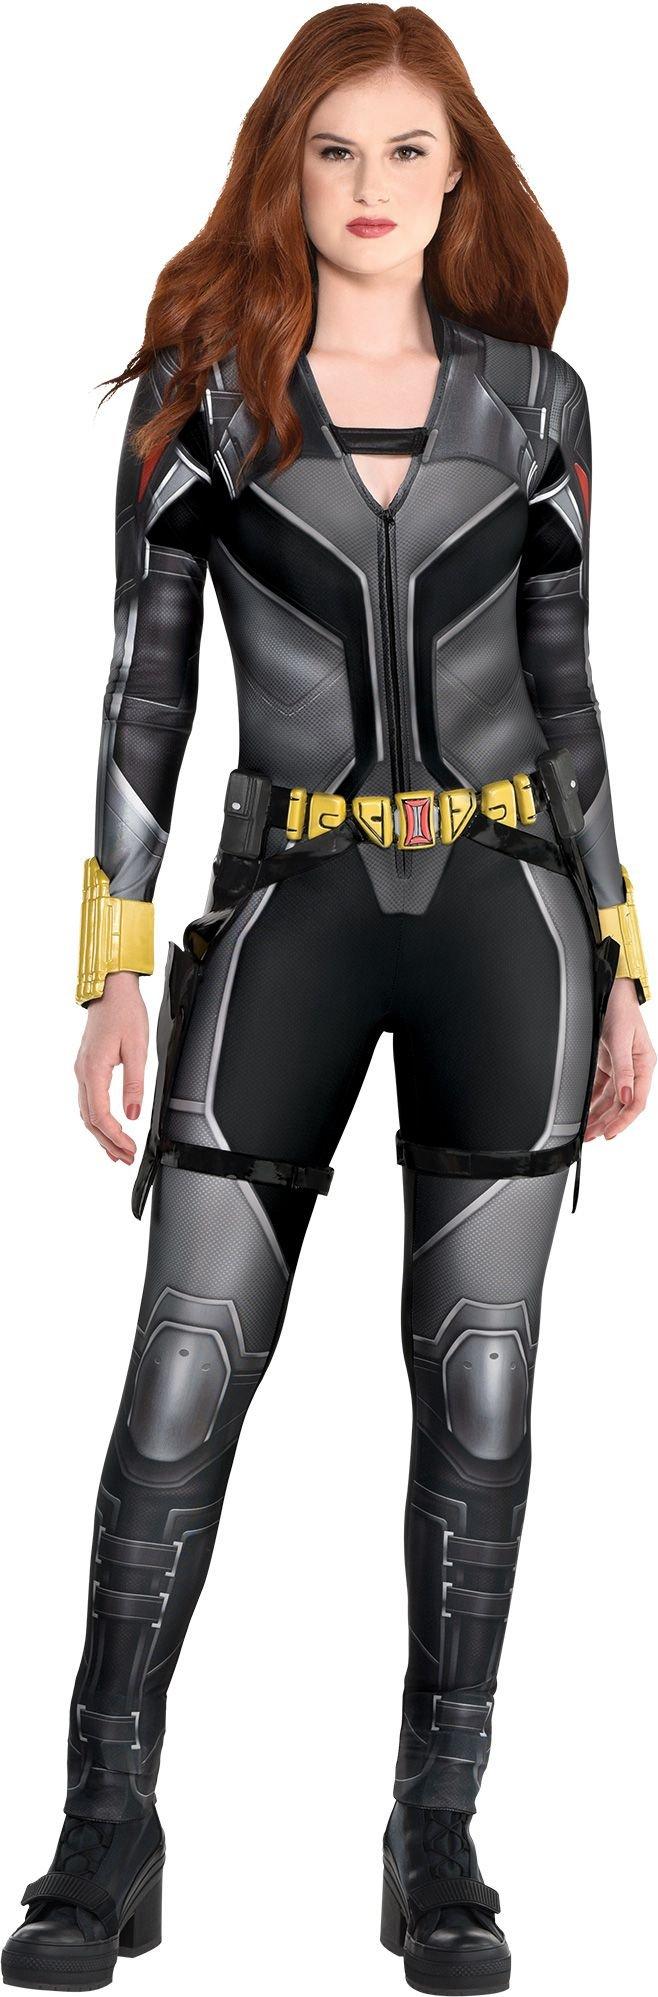 Black Widow Superhero Costume Ideas